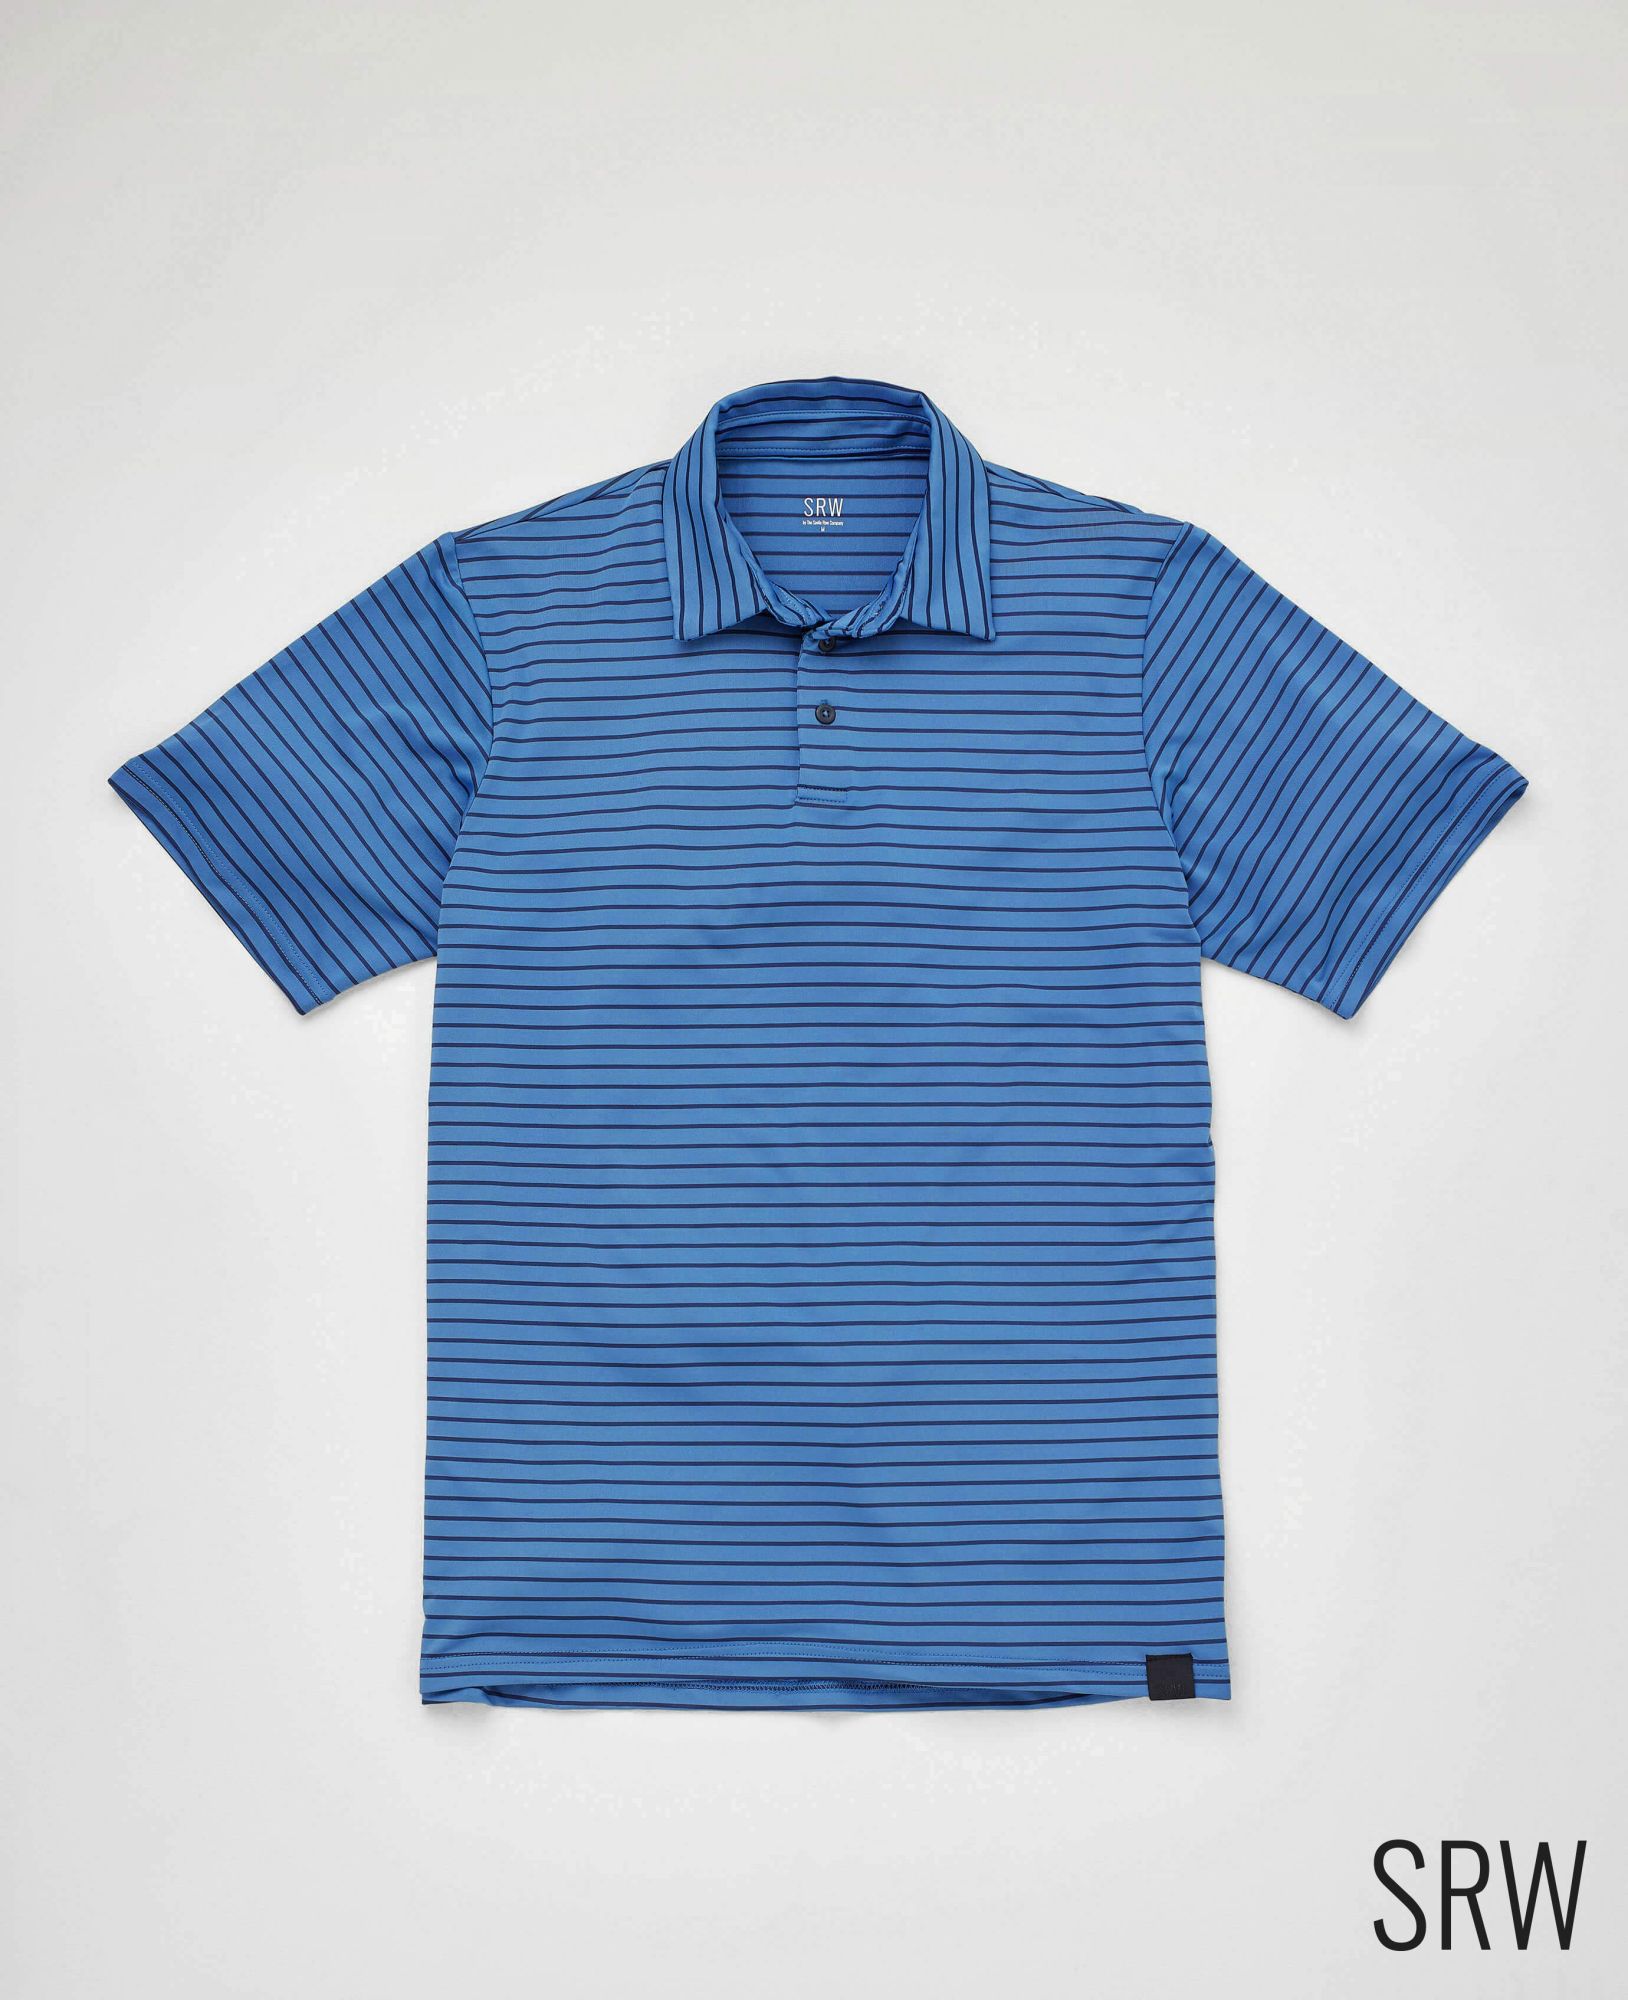 SRW Active Non-Iron Blue Navy Stripe Short Sleeve Polo Shirt XXL